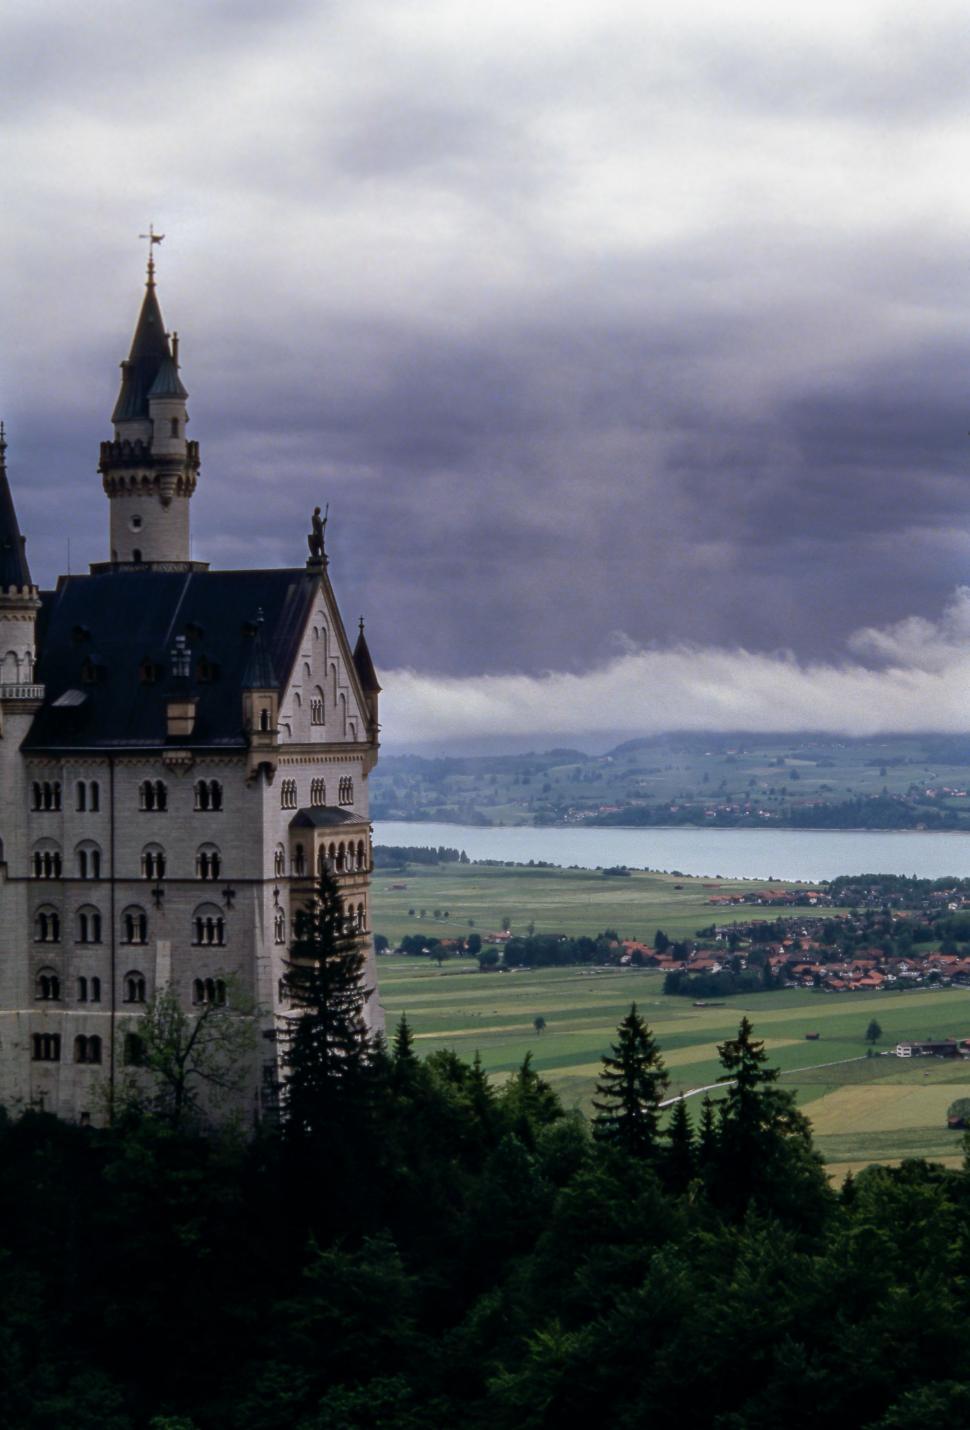 Free Image of Castle Overlooking Lake 